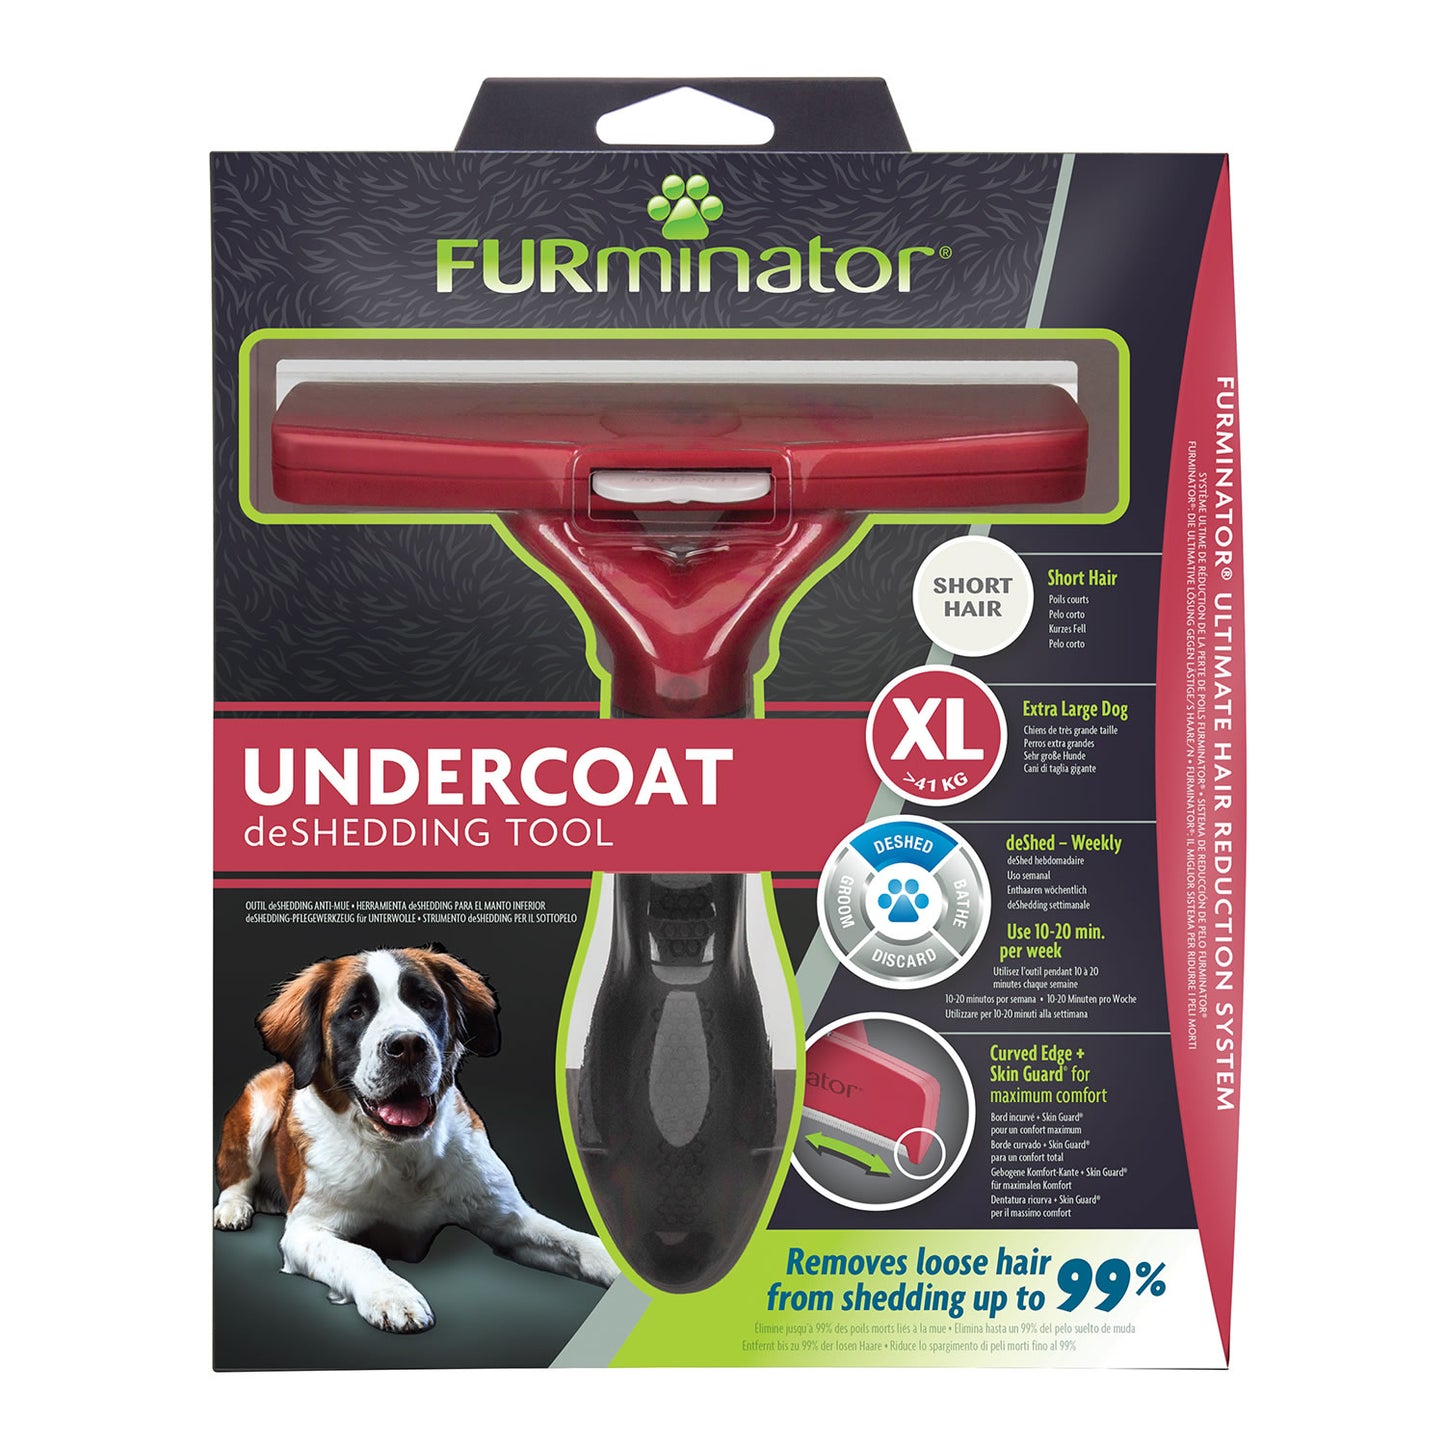 Furminator Undercoat DeShedding Tool for Long Hair Dog